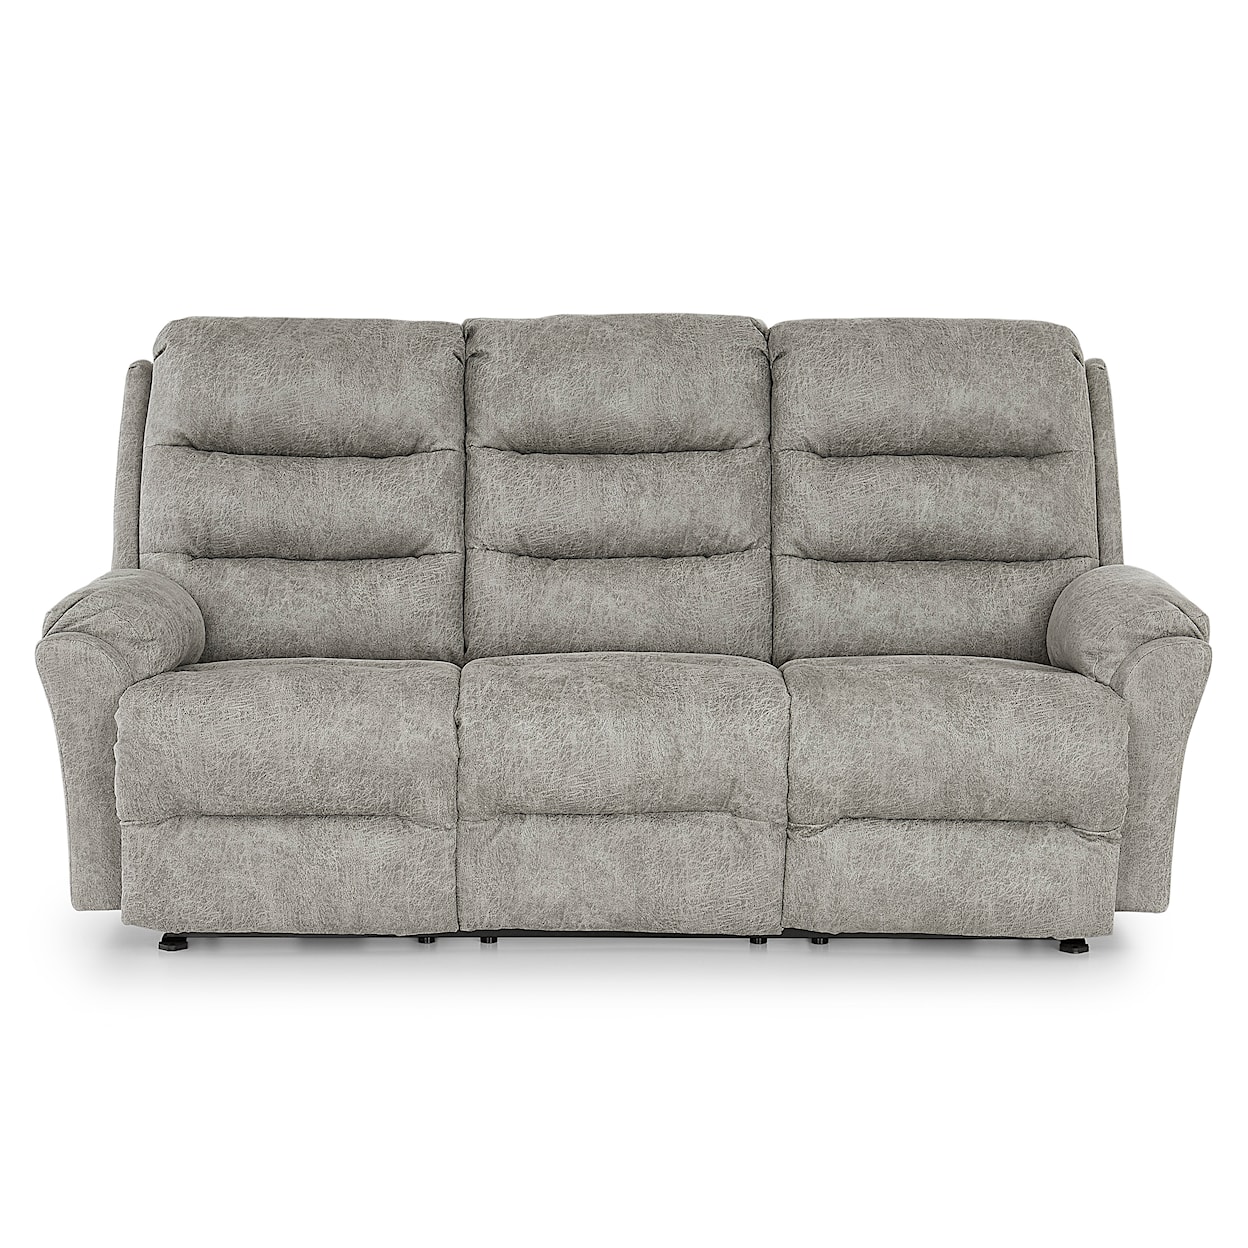 Bravo Furniture Oren Wall Saver Reclining Sofa